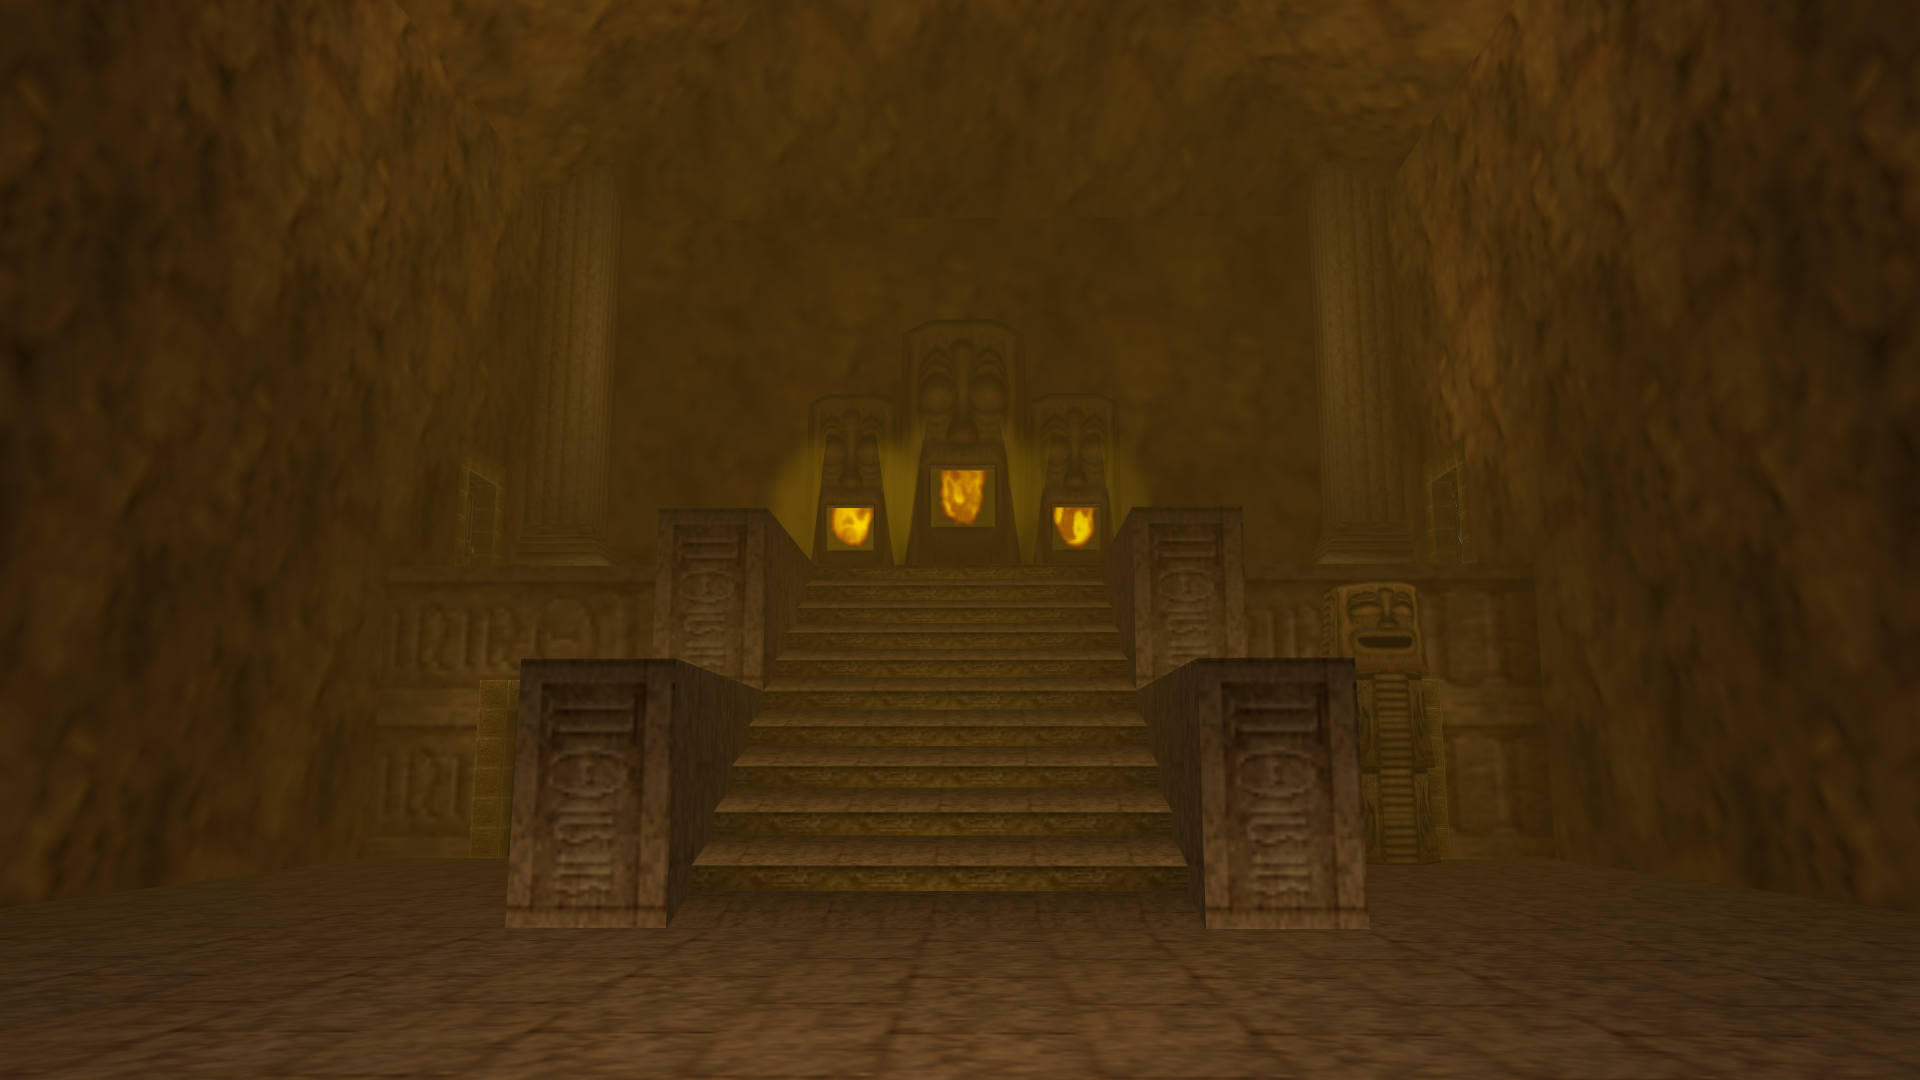 The Fire Temple!, Nimpize Adventure - Zelda: Ocarina of Time, Rom Hack